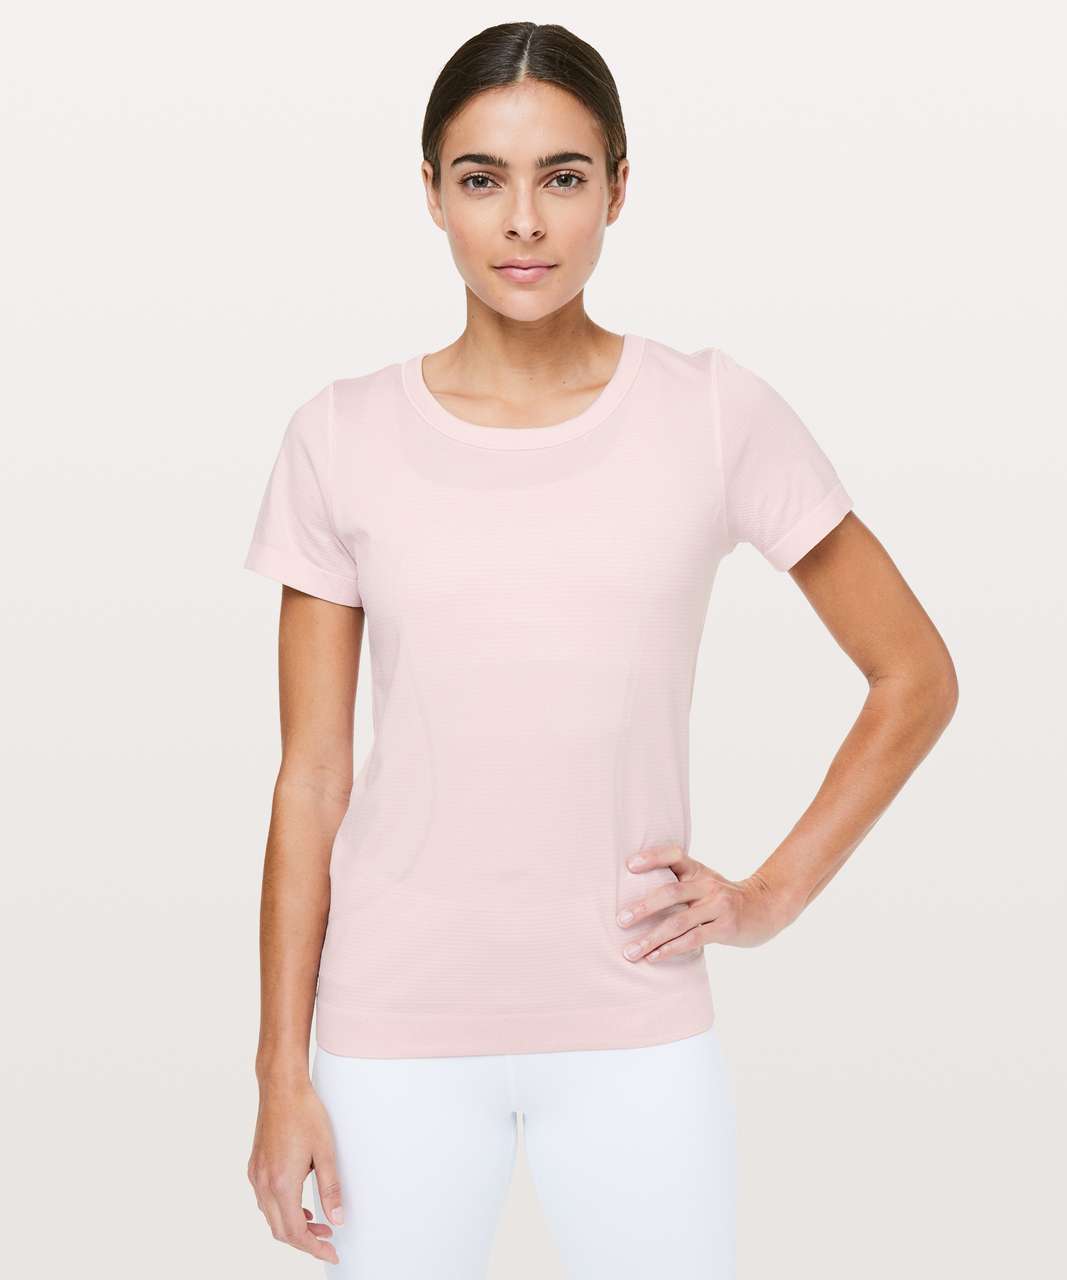 lululemon pink shirt